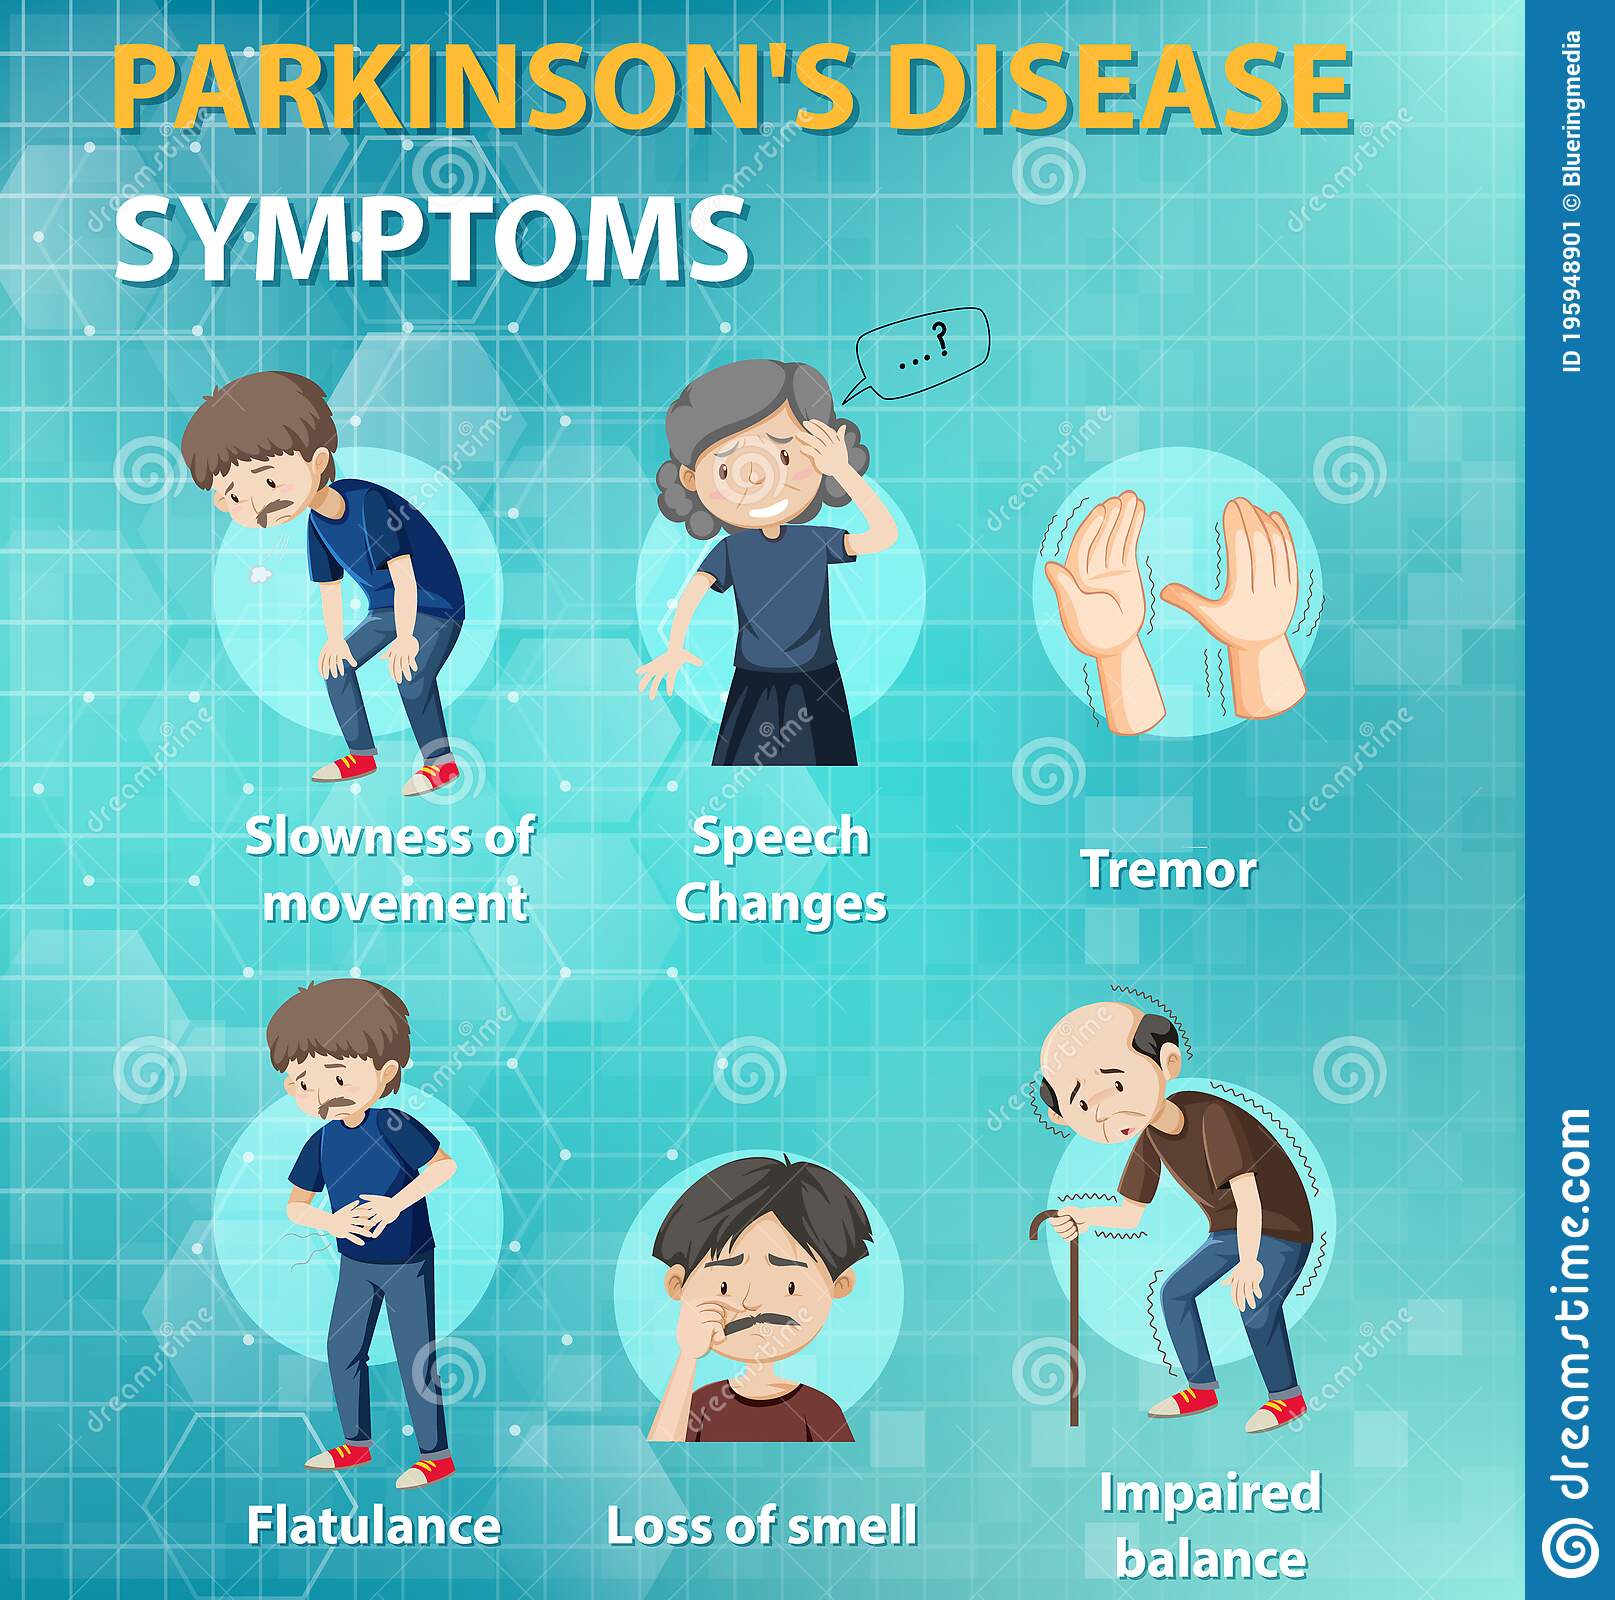 Is Parkinson